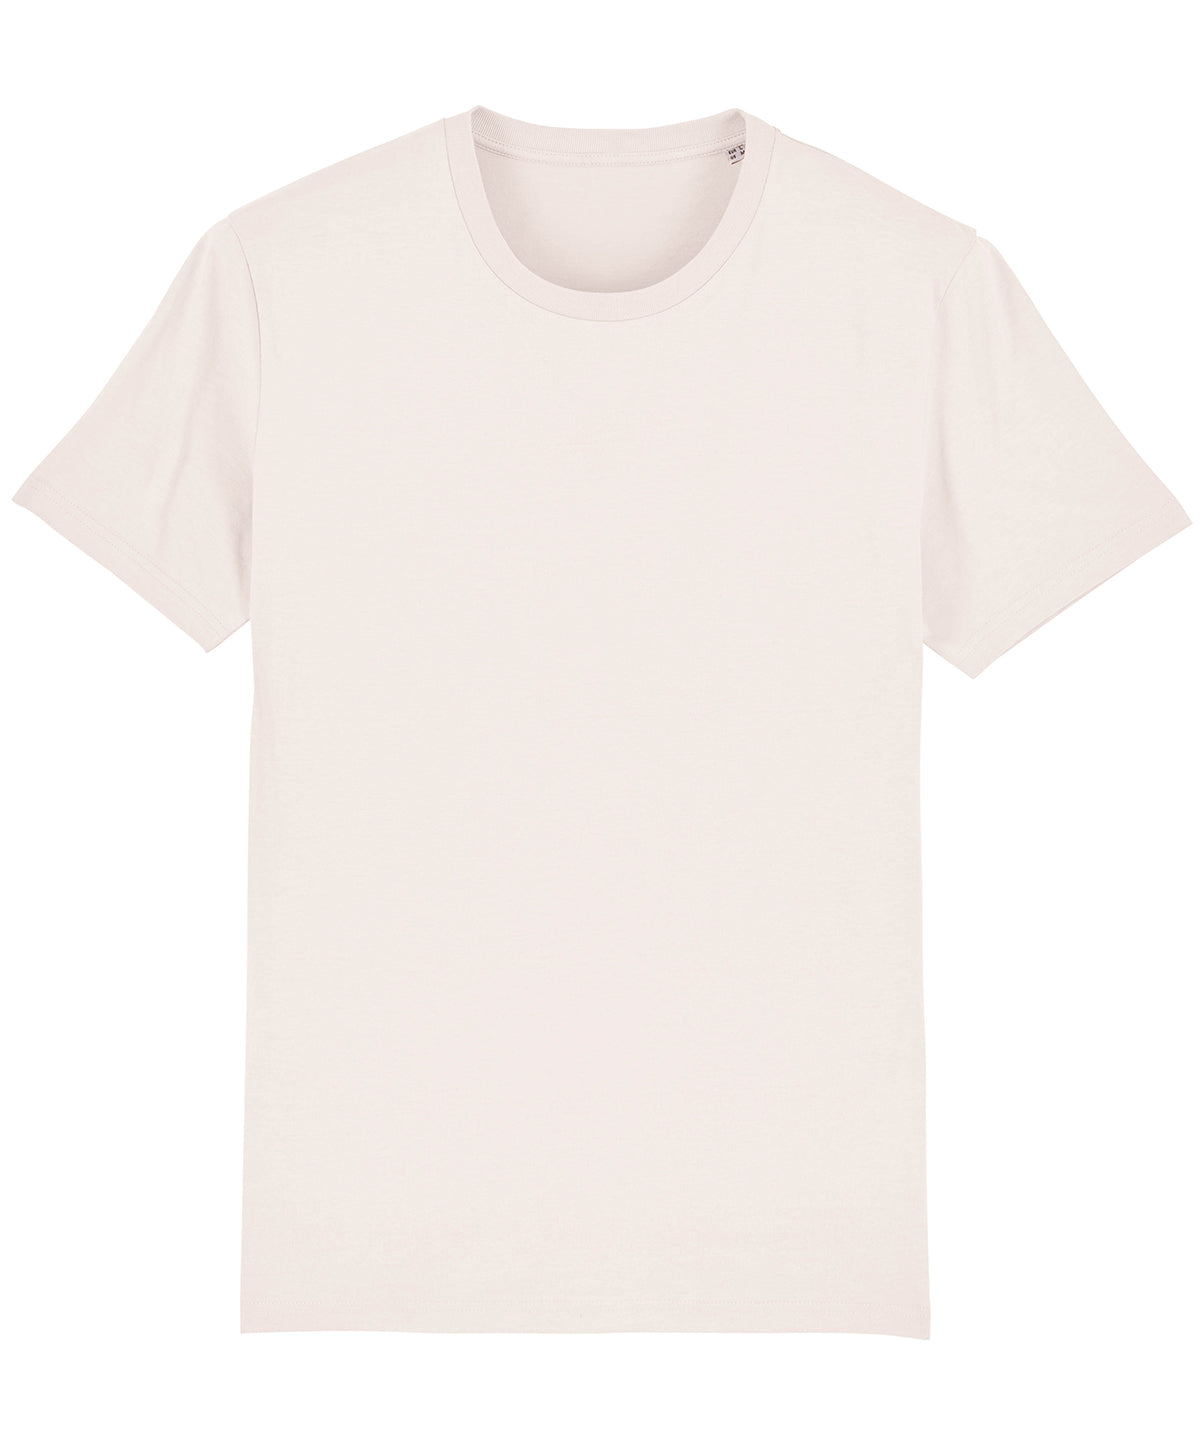 Stanley/Stella Unisex Creator Iconic T-Shirt  Vintage White